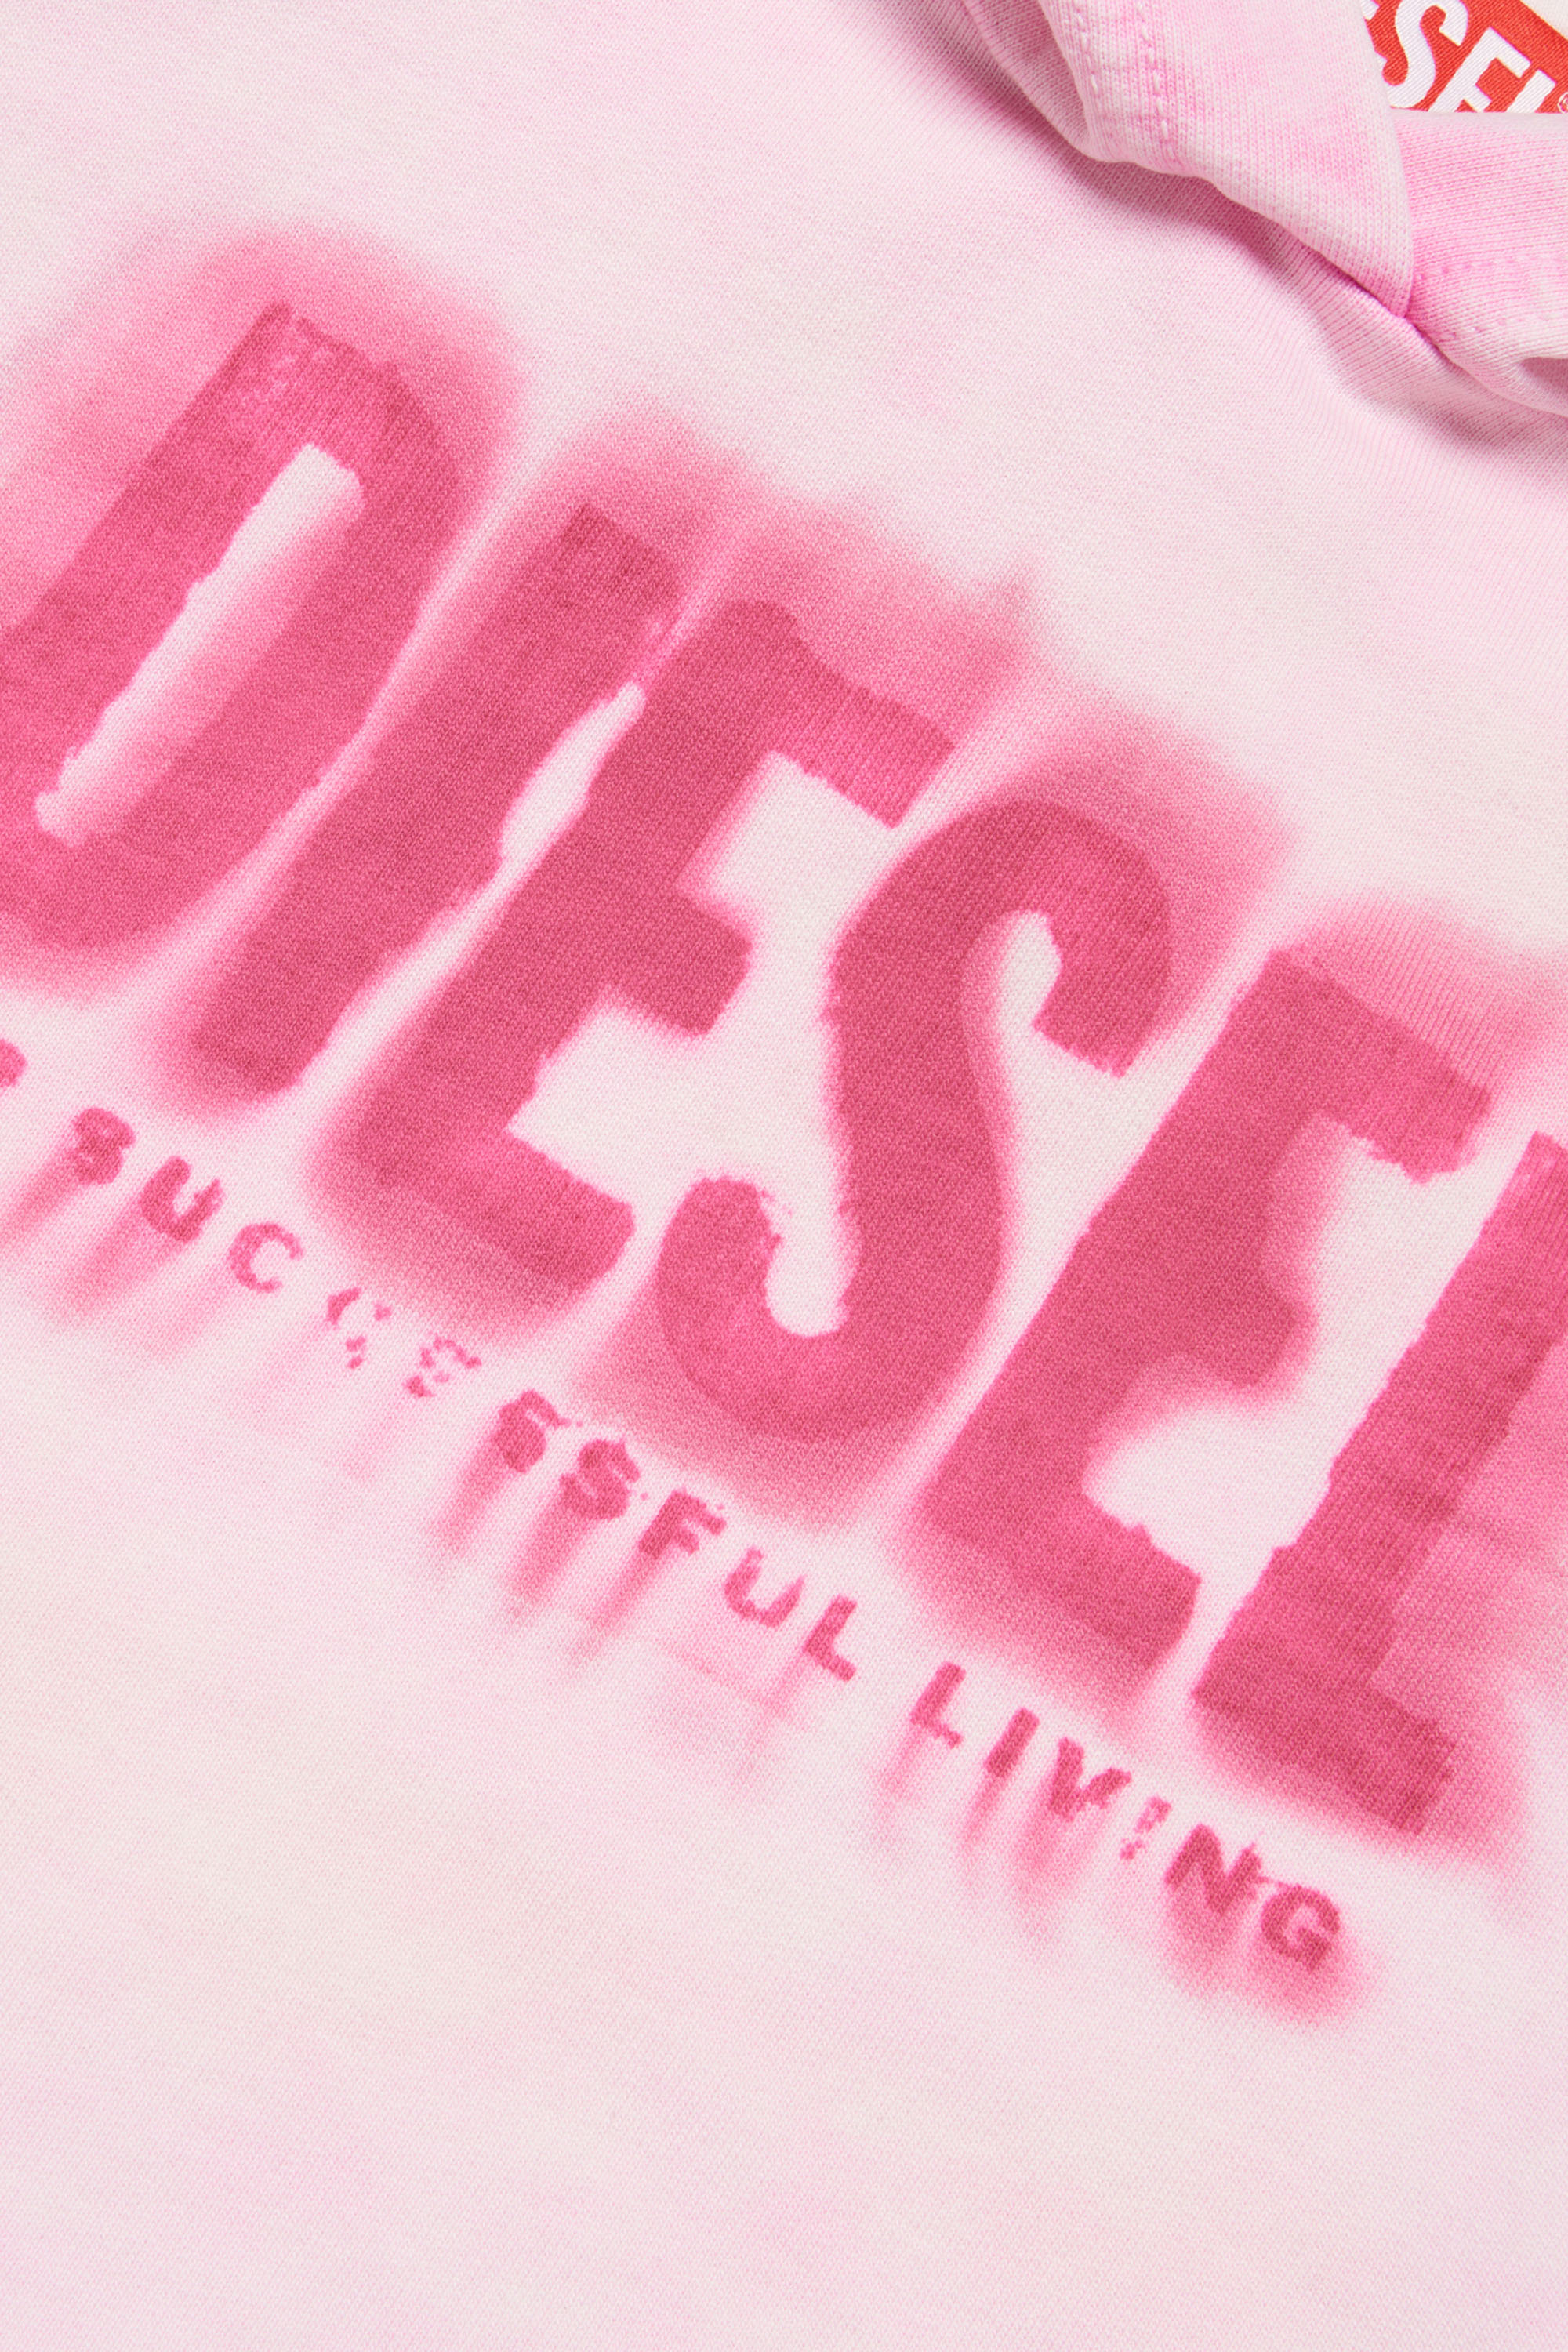 Diesel - SQUINGY, Pink - Image 3